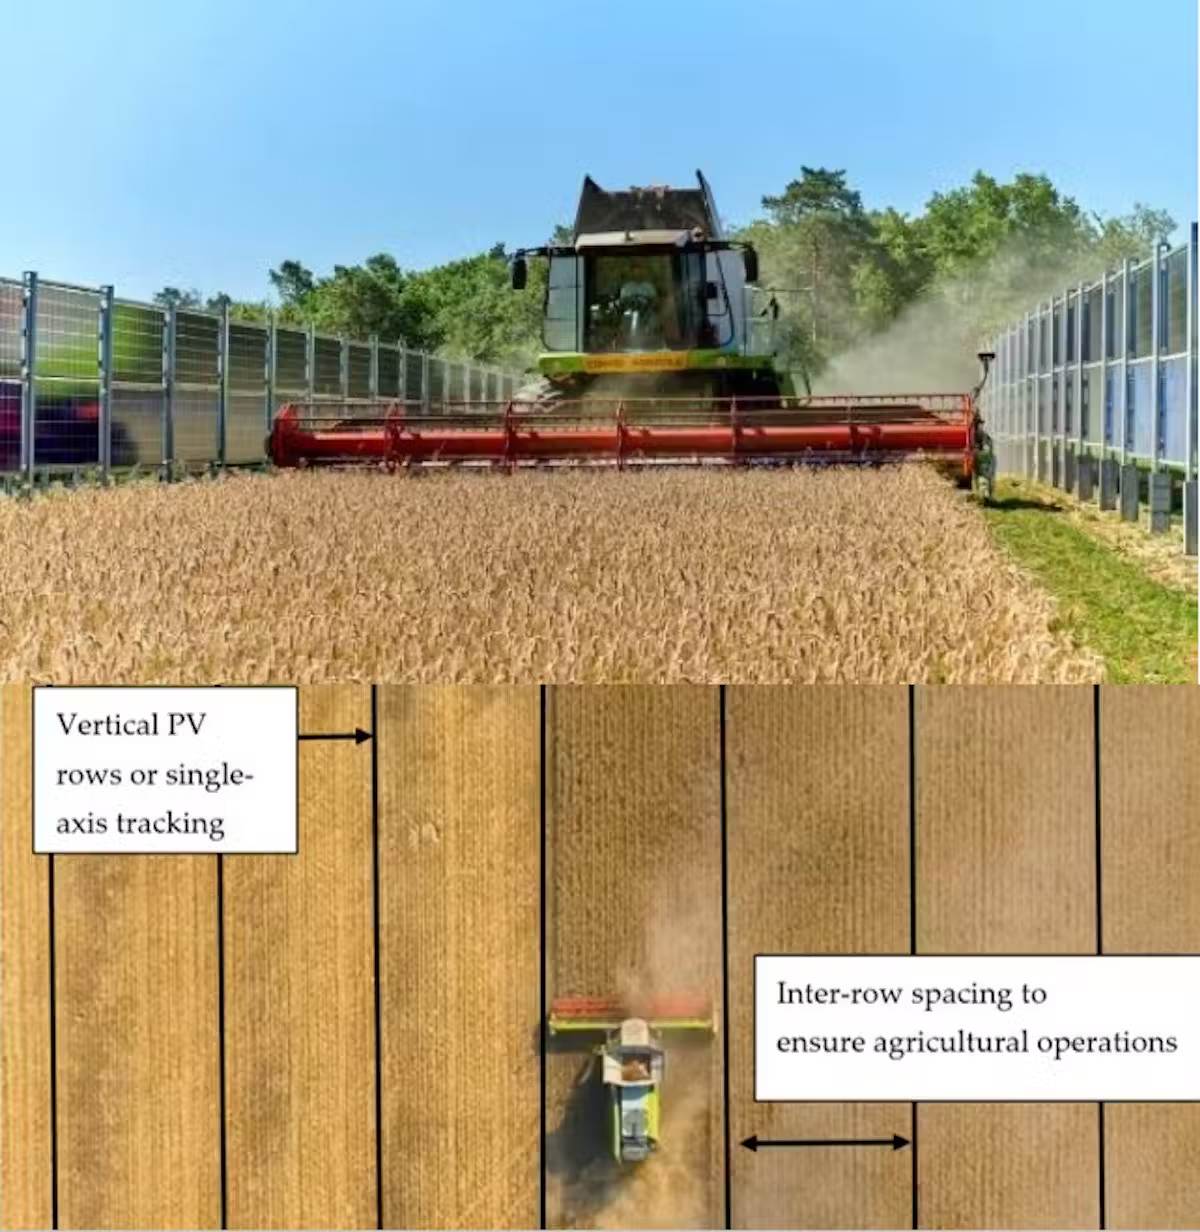 Farming machinery operating between solar panels